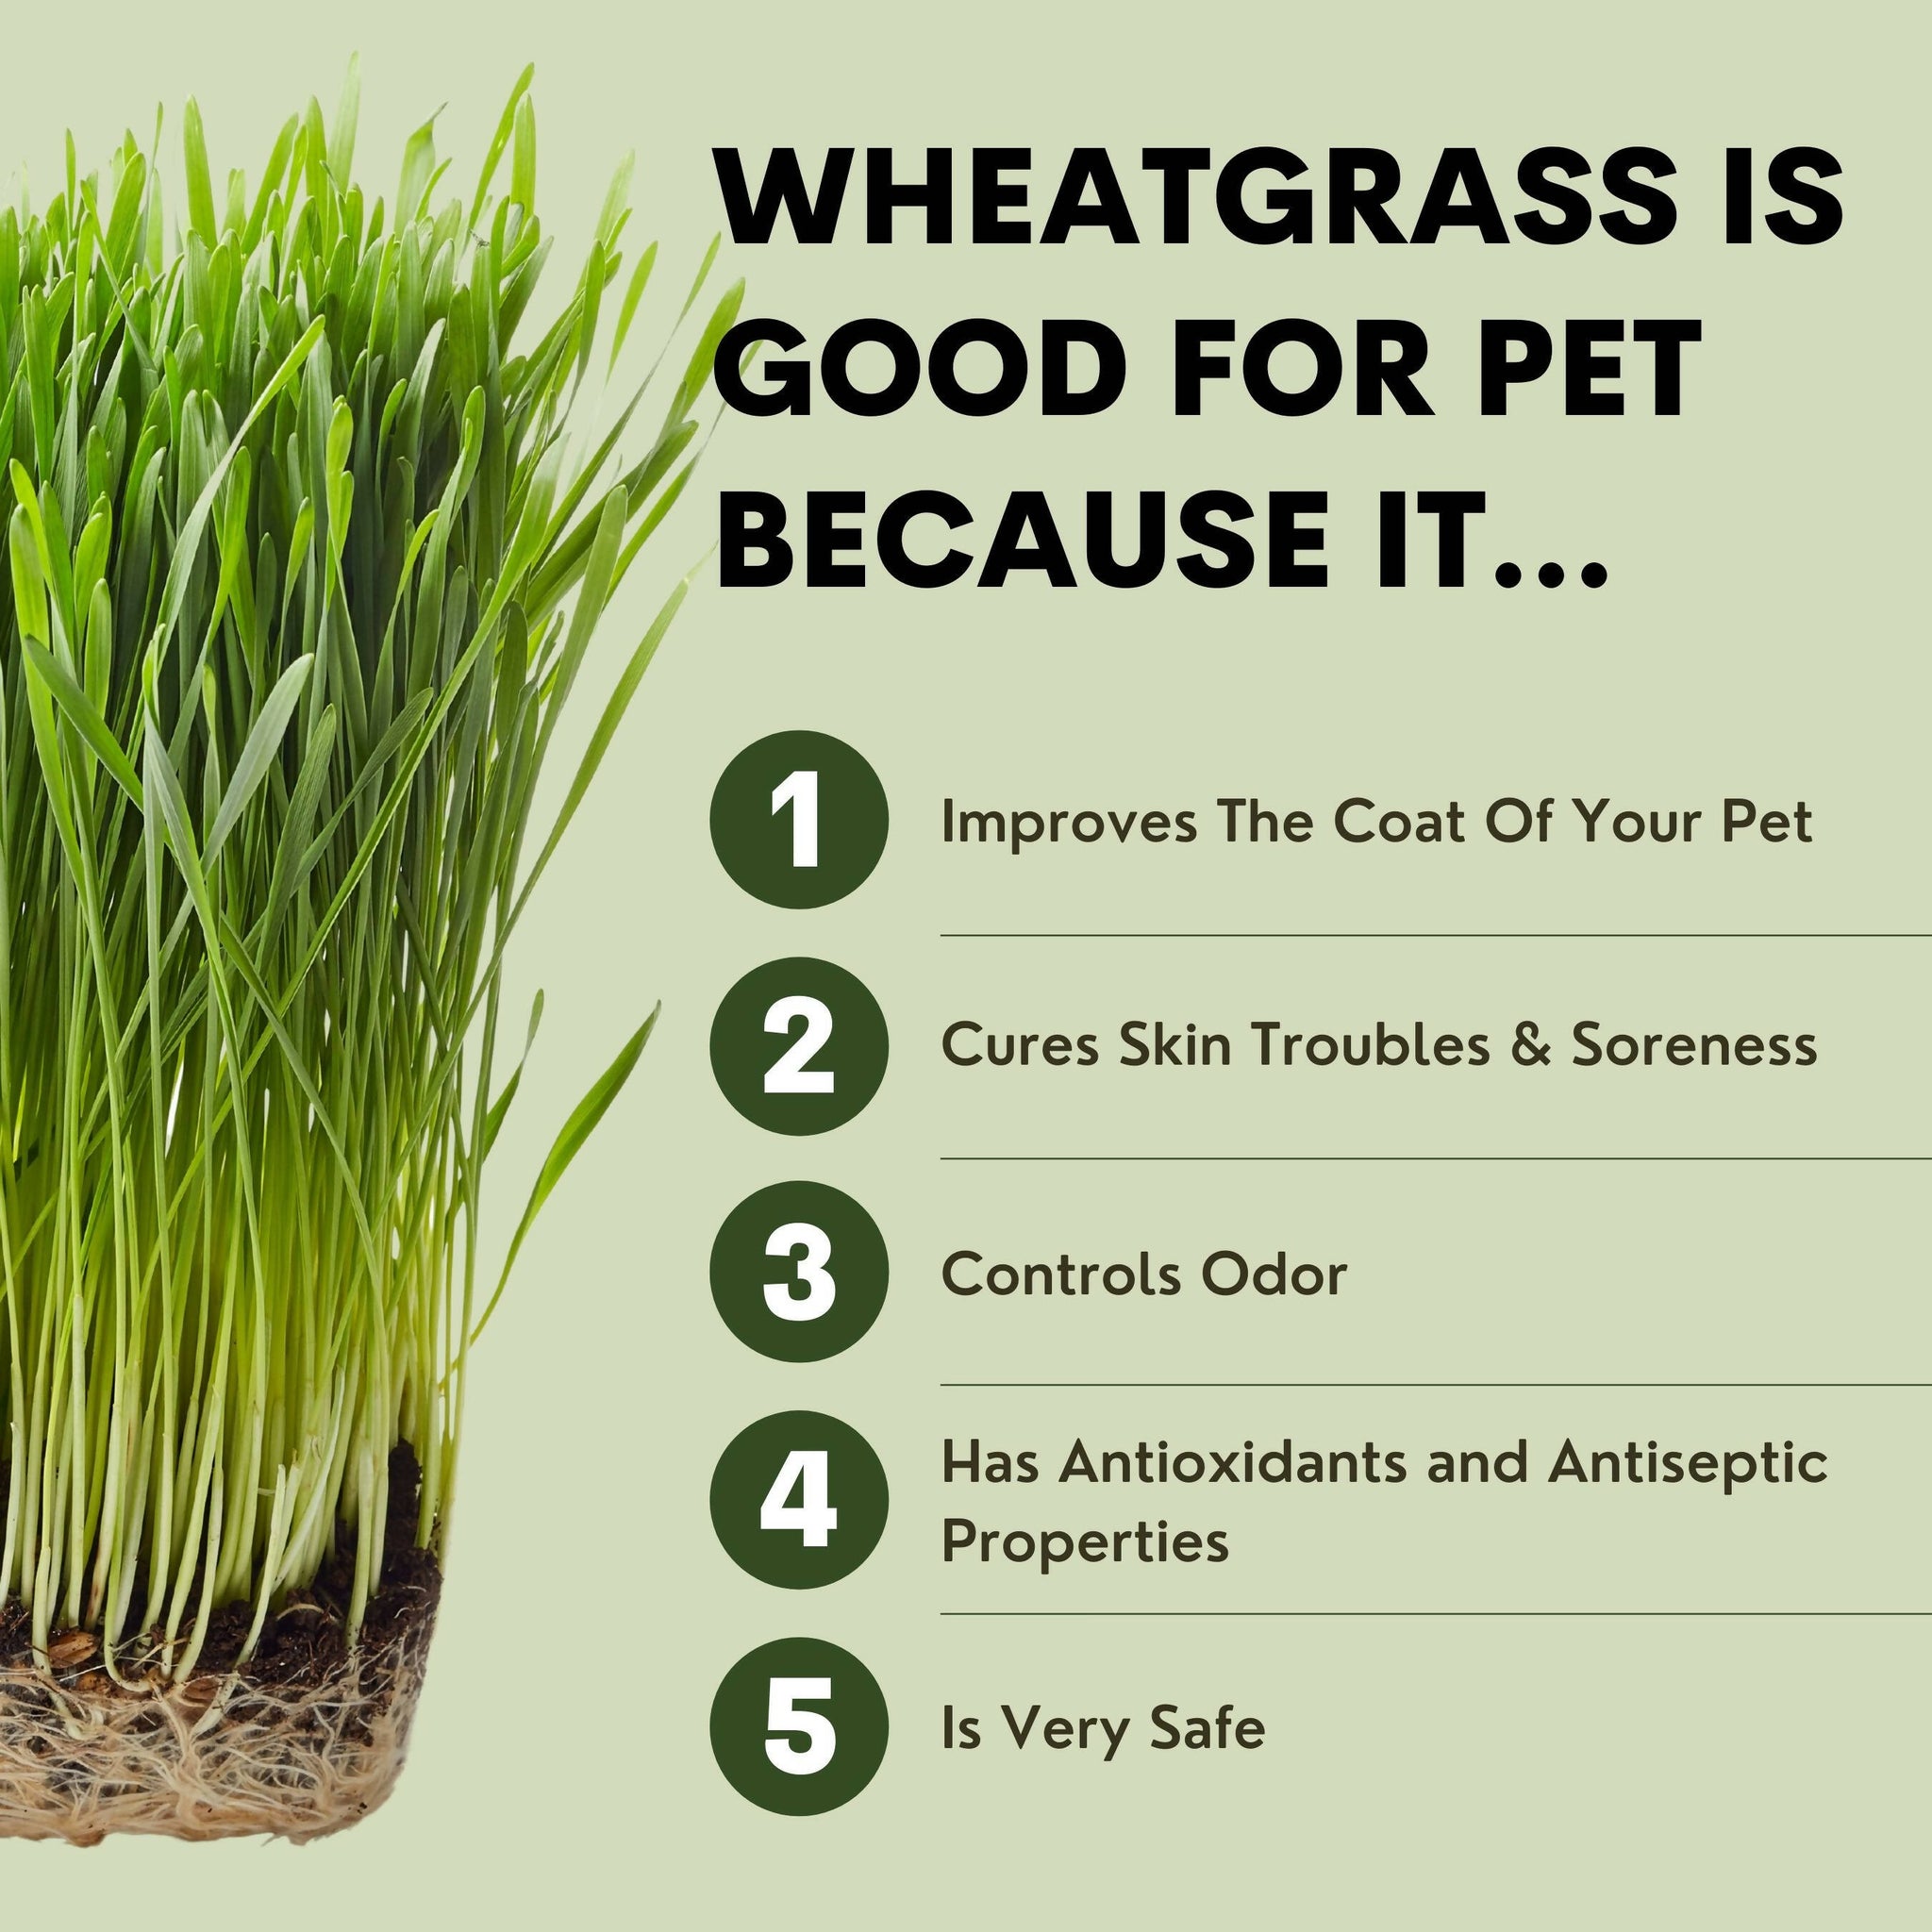 [TRULYPET] [1+1] 밀싹 올게닉 애견 발바닥 재생 밤(유통기한 2024년 5월20일) Organic Wheatgrass Dog Cat Paw Pads Balm for Cracked, Irritated Paw, Palm, Nose